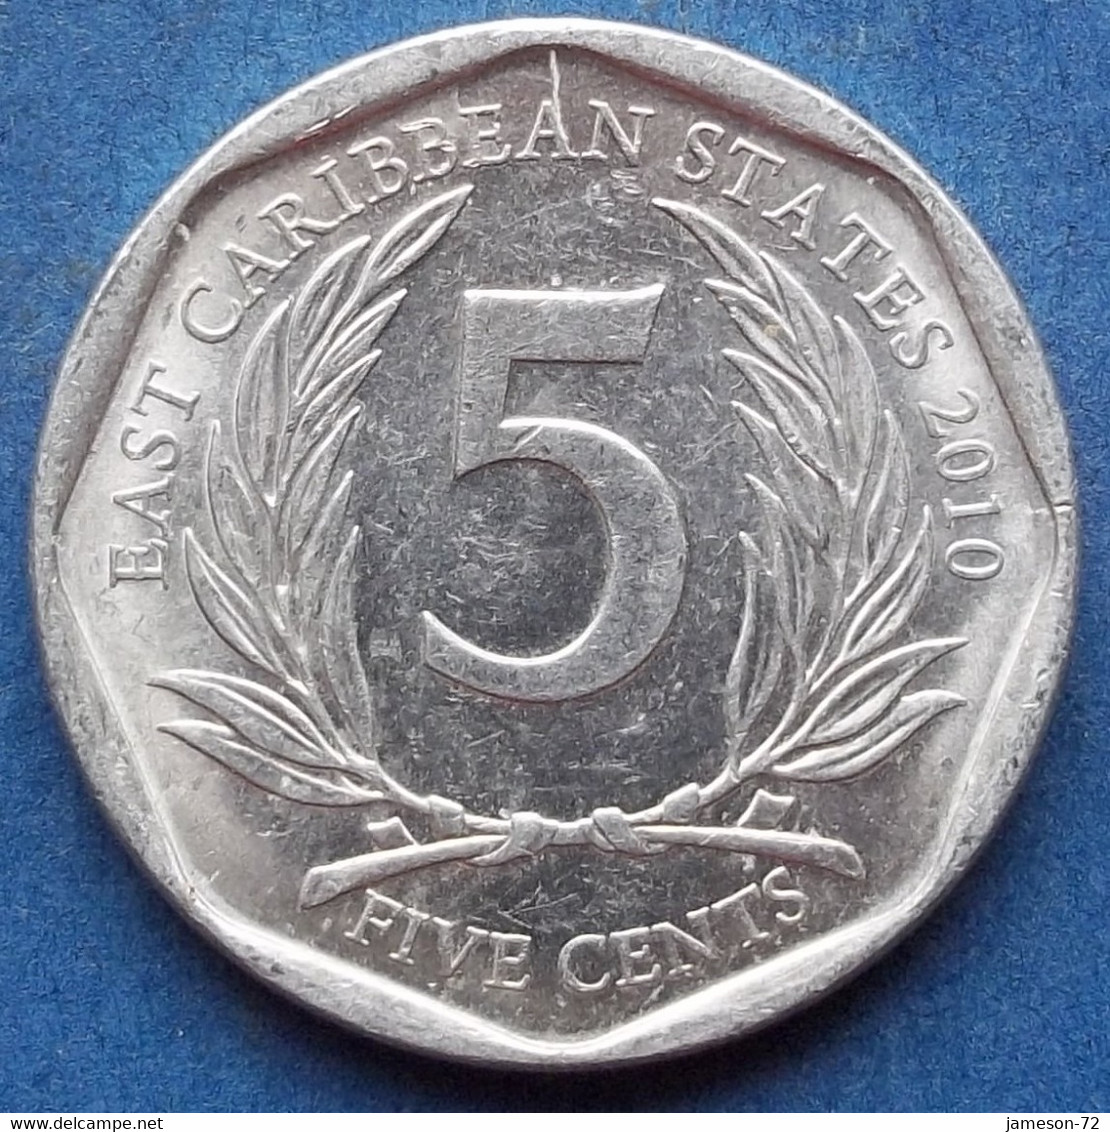 EAST CARIBBEAN STATES - 5 Cents 2010 KM# 36 Elizabeth II - Edelweiss Coins - Caraibi Orientali (Stati Dei)